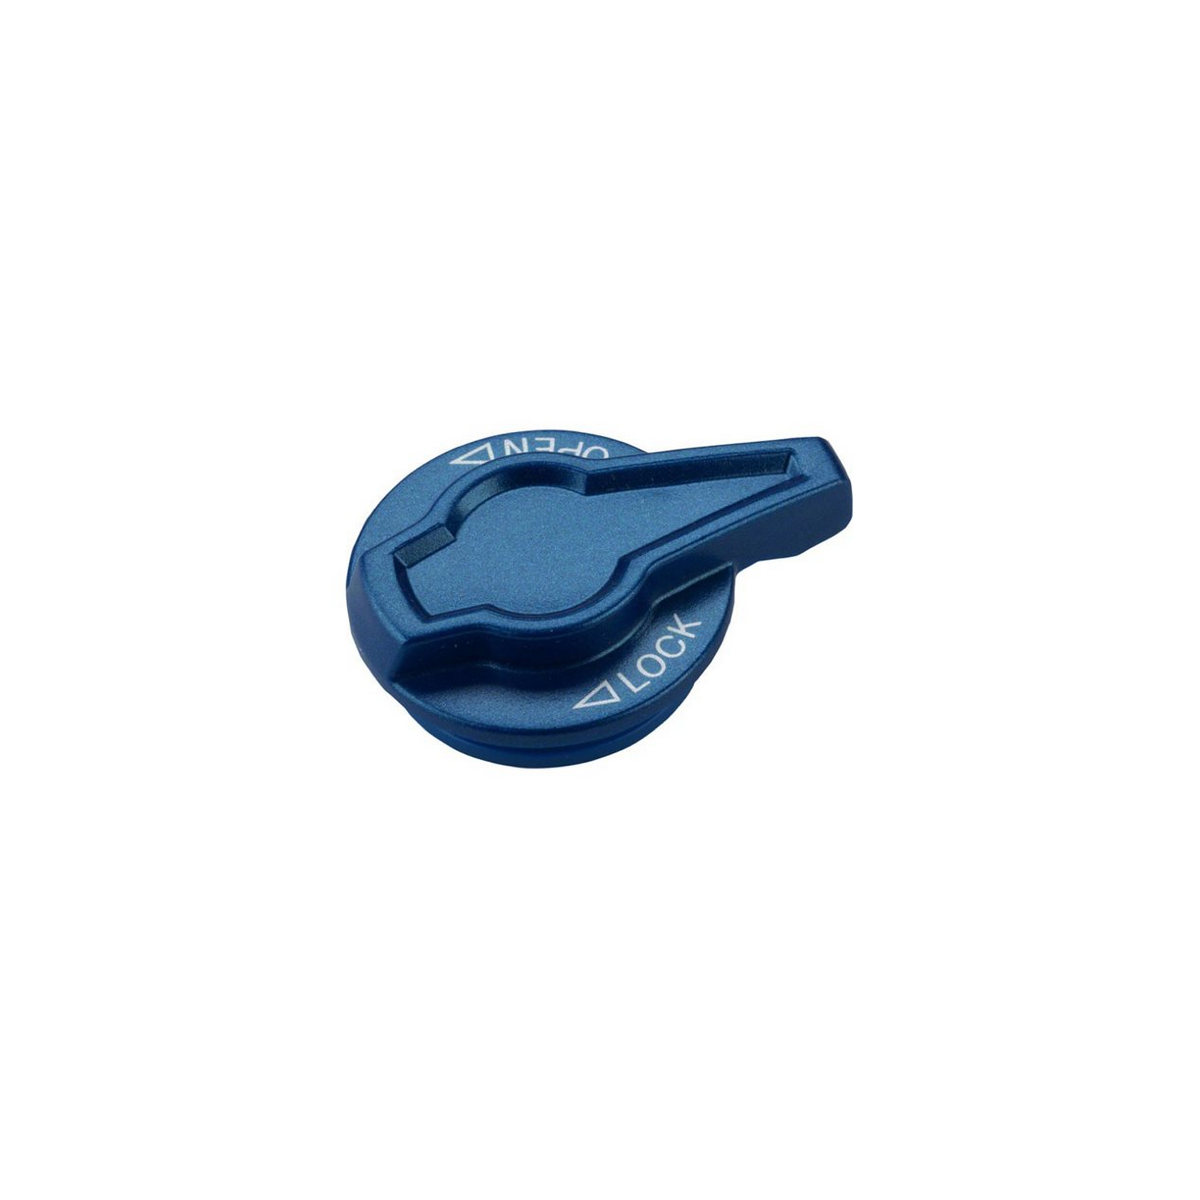 capuchon pivotant bleu pour la cartouche de SF15-XCR-LO/SF16-Raidon XC-LO